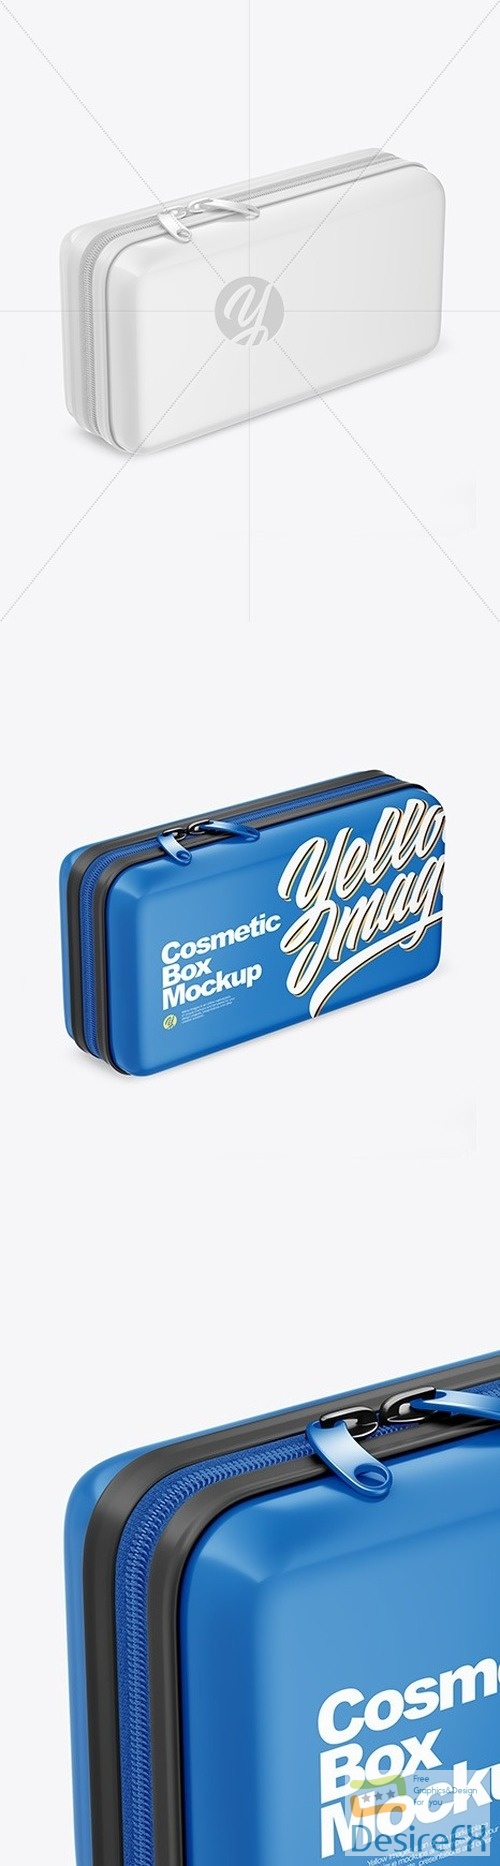 Cosmetic Box Mockup 56671